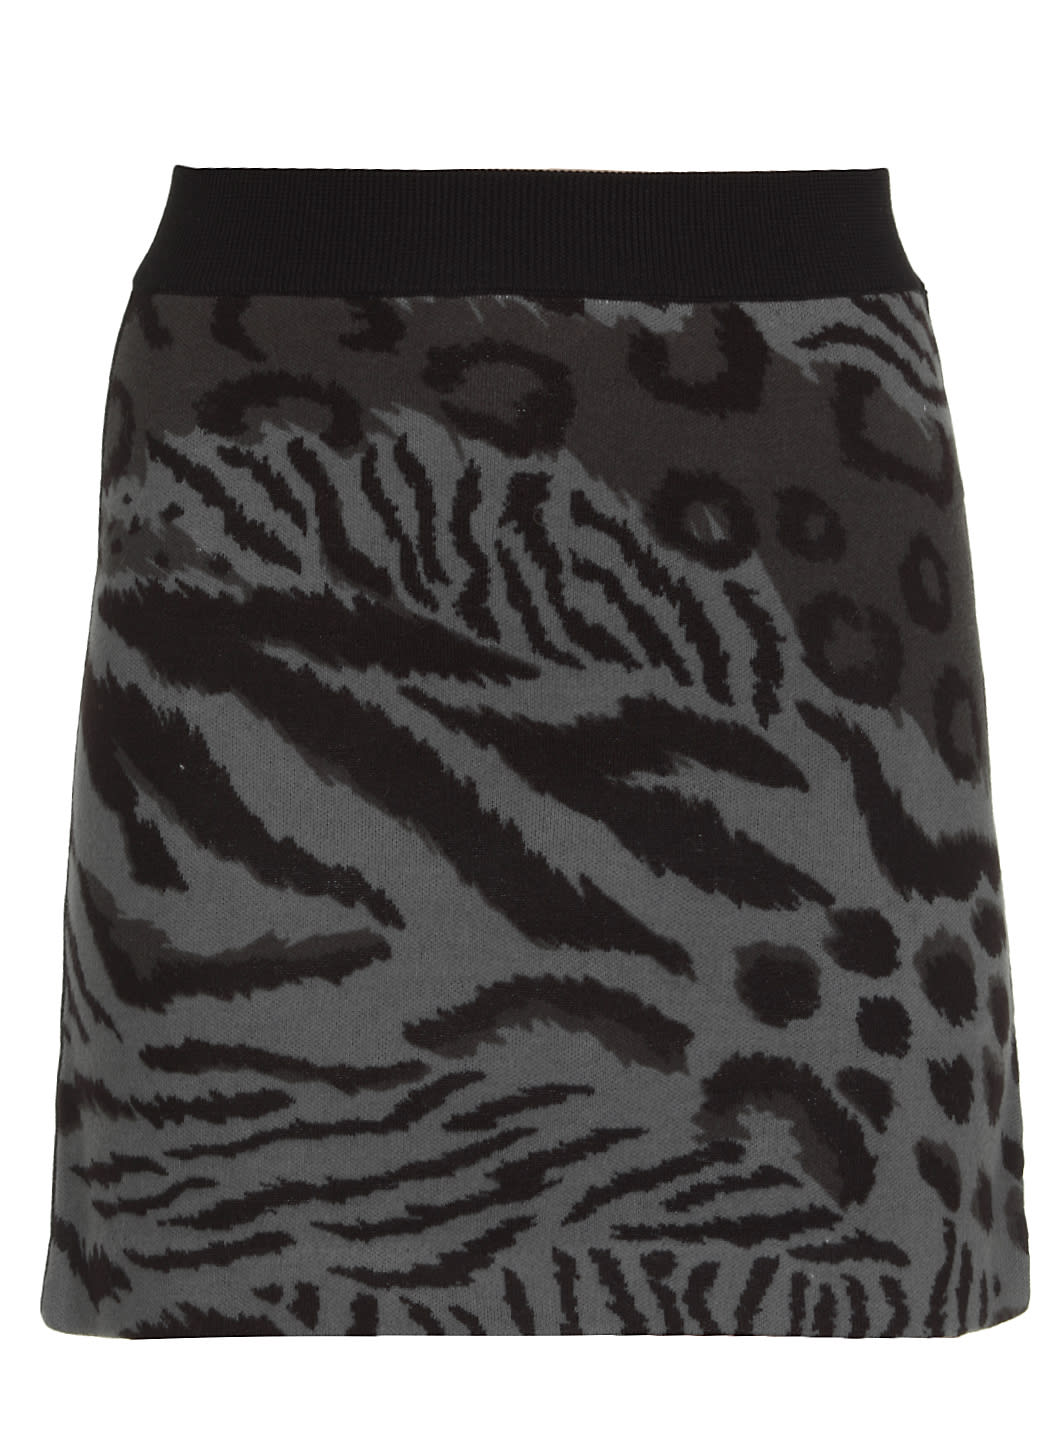 Kenzo Cheetah Leopard Miniskirt